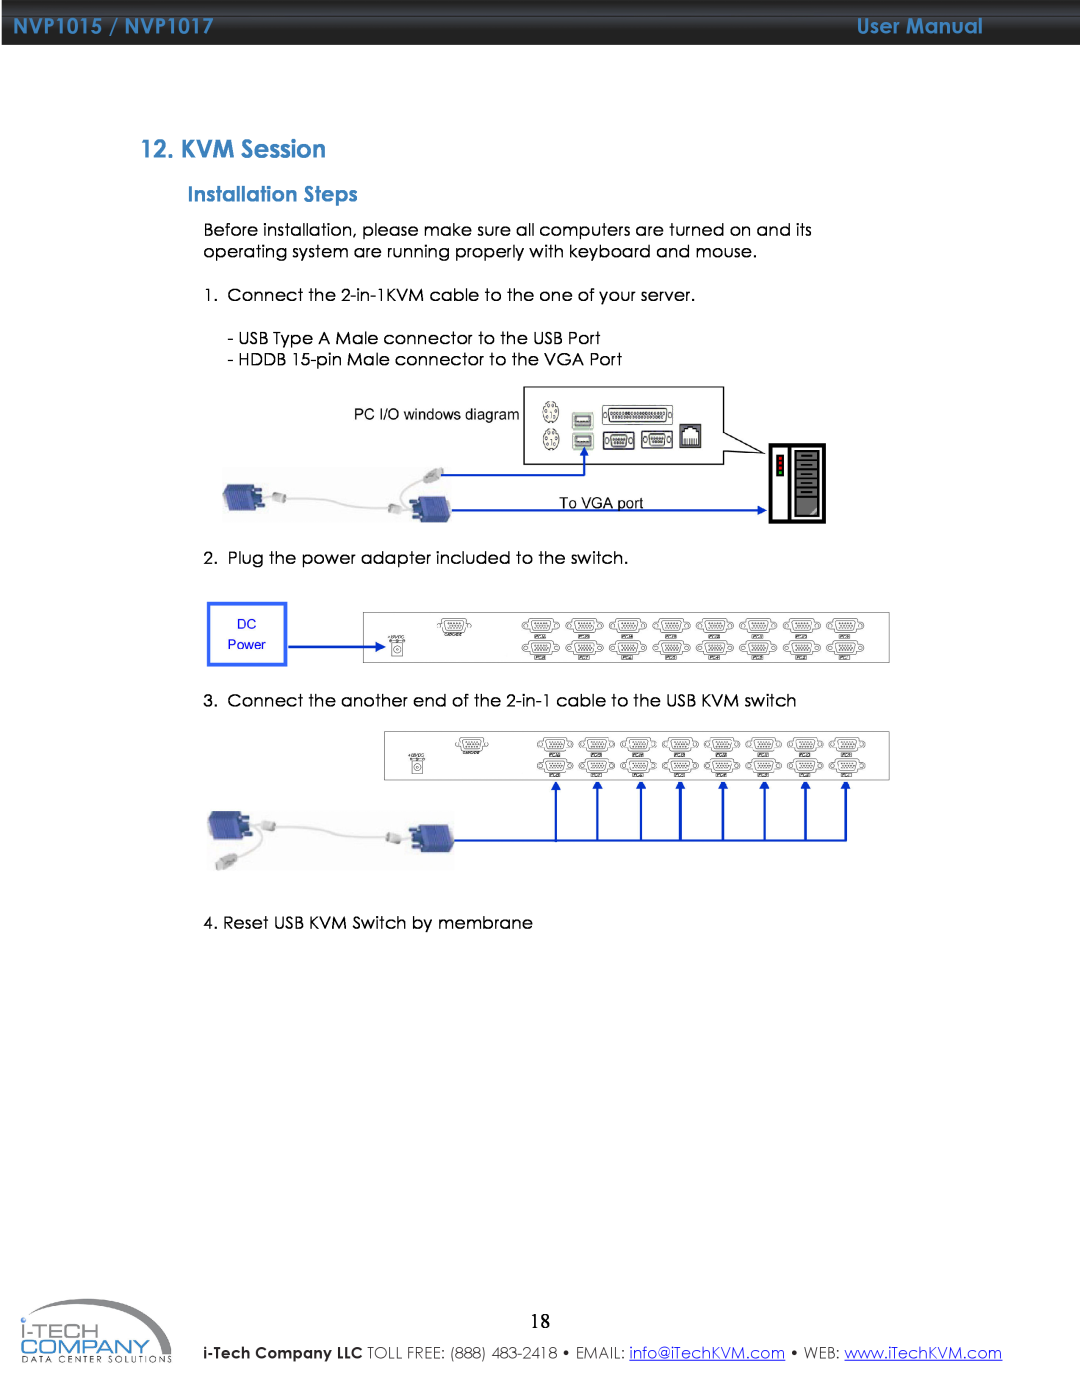 I-Tech Company manual Installation Steps, KVM Session, NVP1015 / NVP1017, User Manual 